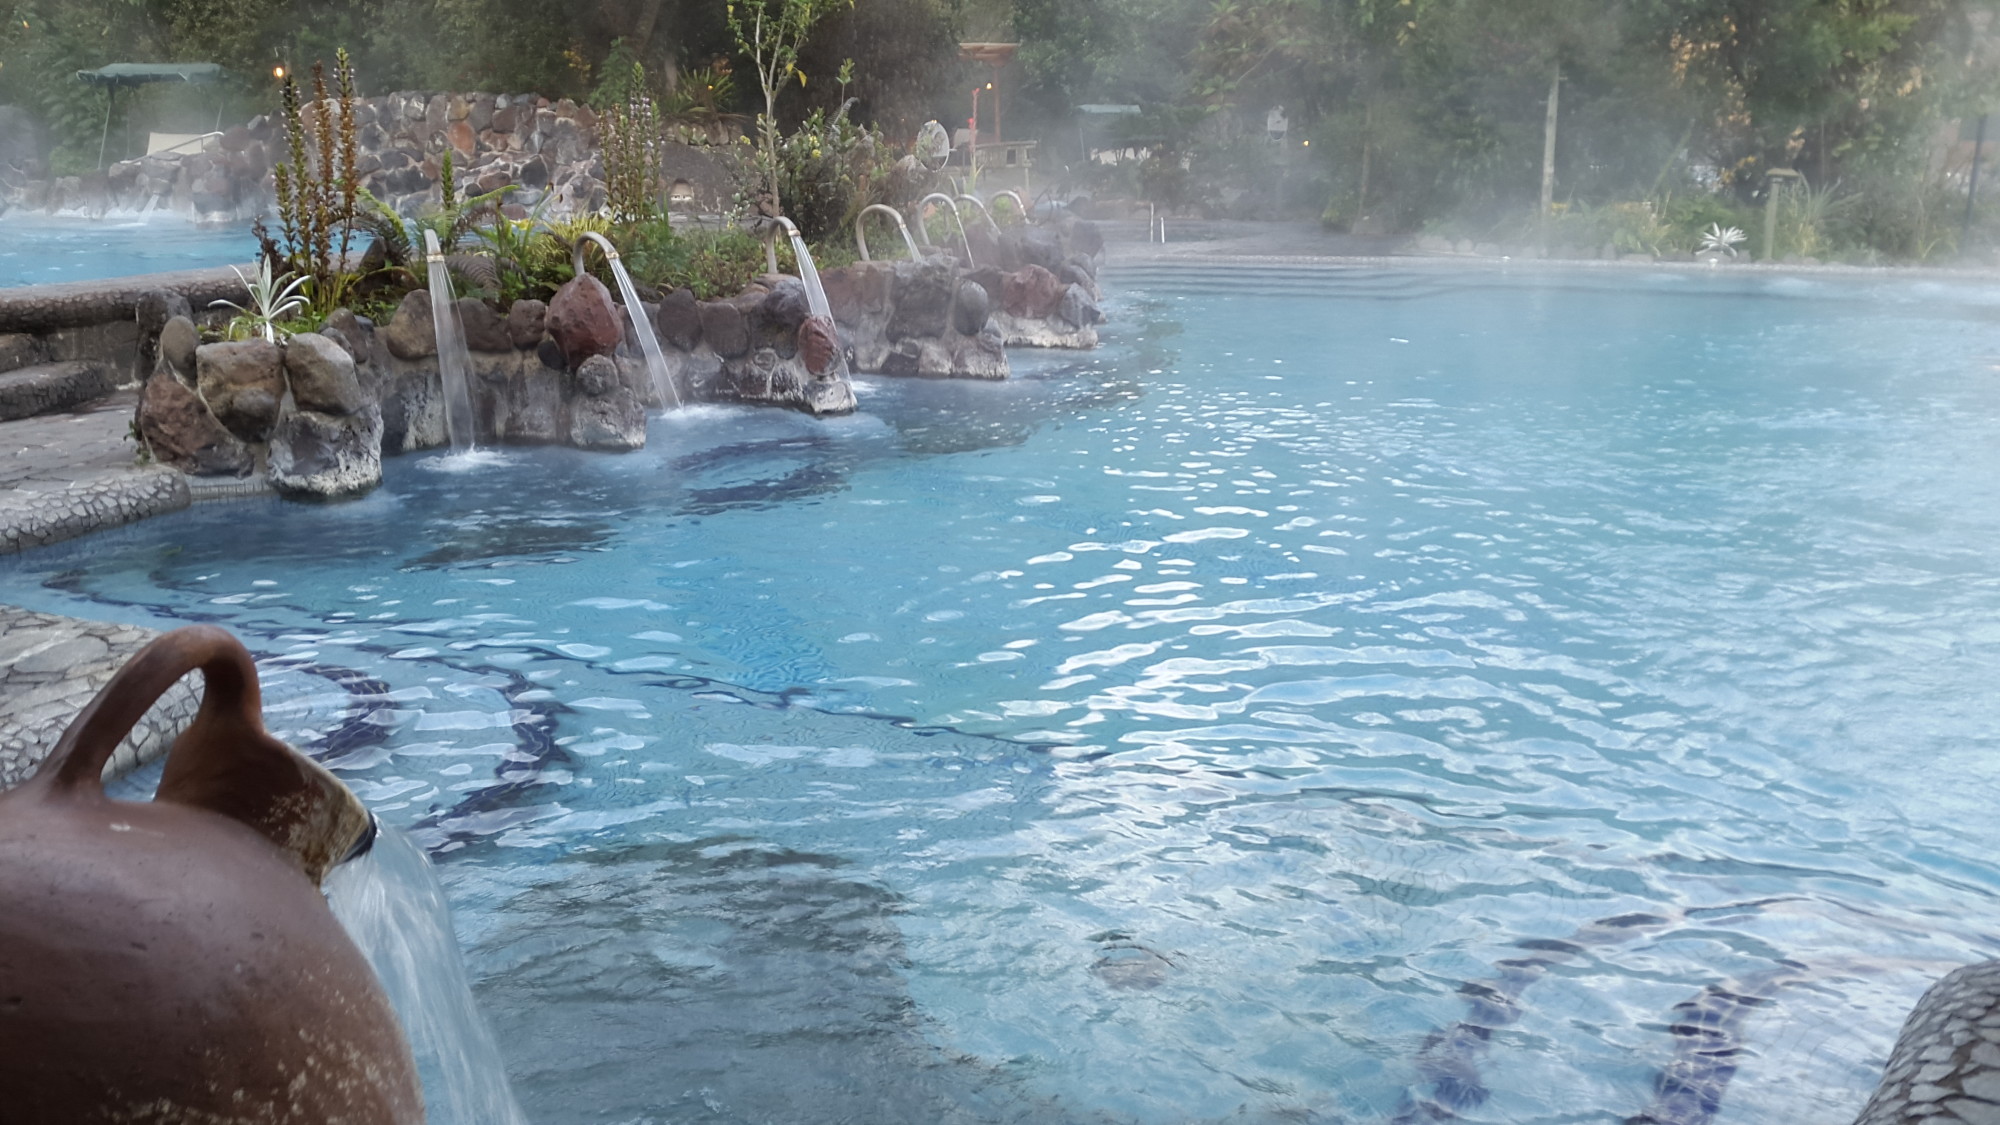 4) Papallacta Hot Springs: 